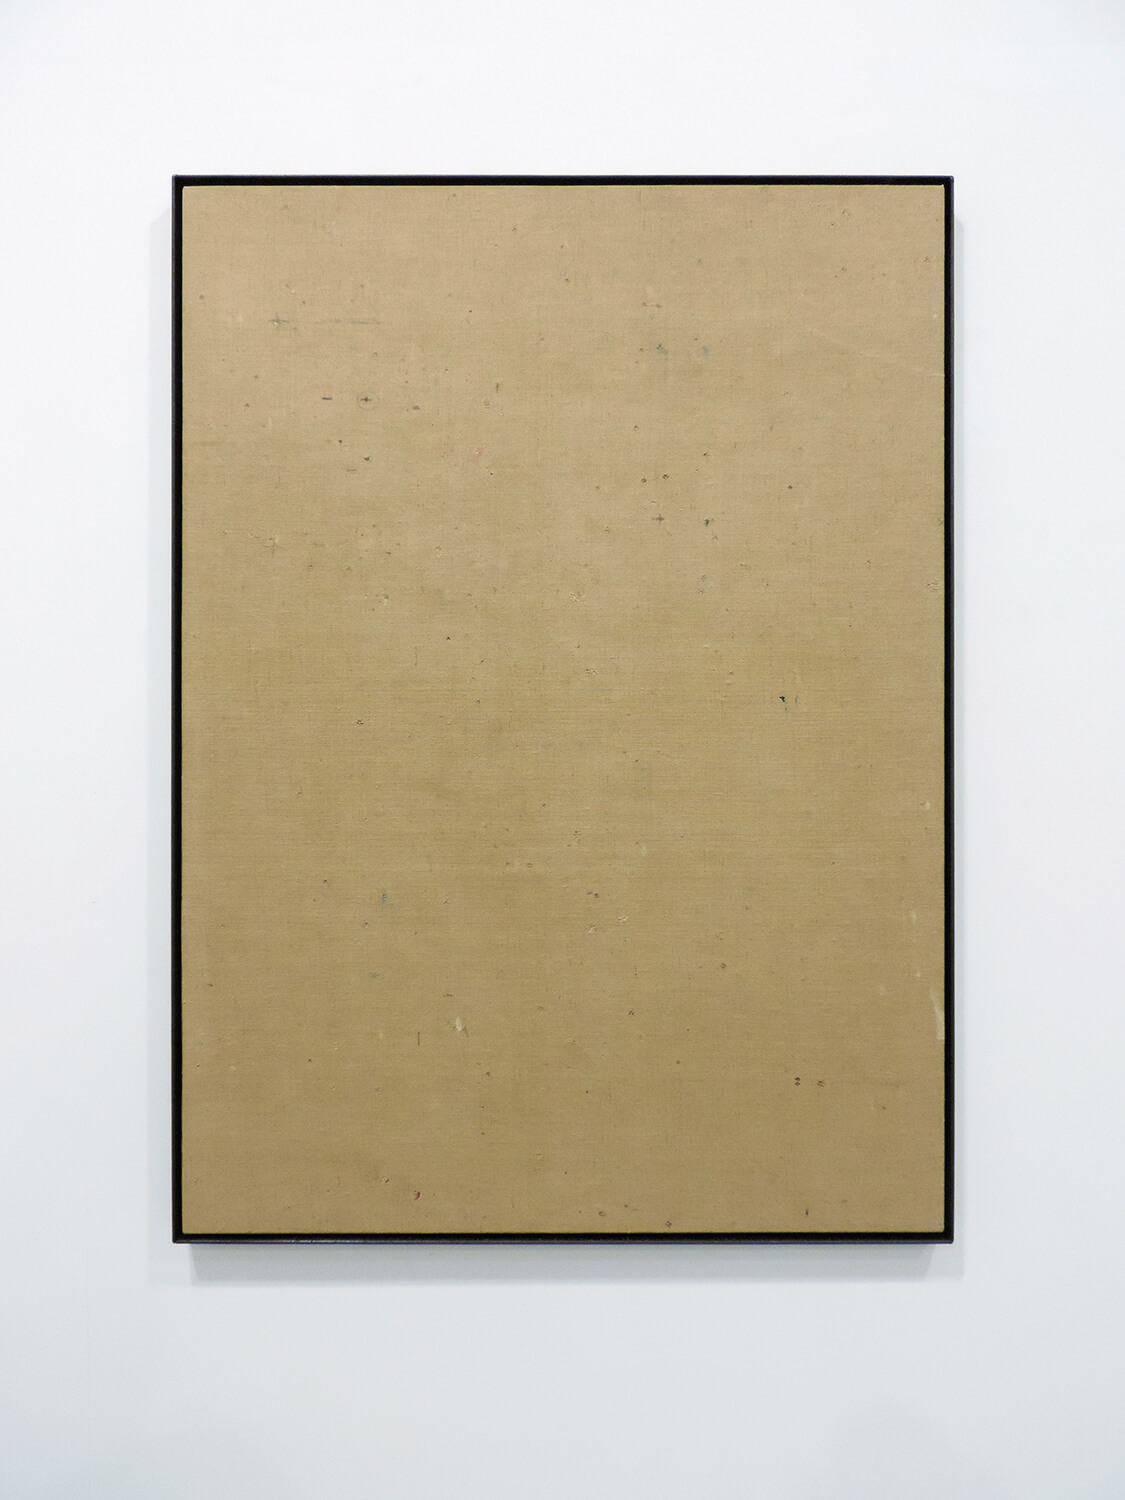 <b>裸眼見麻布（京都市美術館壁布)</b><br>鉛筆、チョーク他<br>745 x 545 mm<br>2015